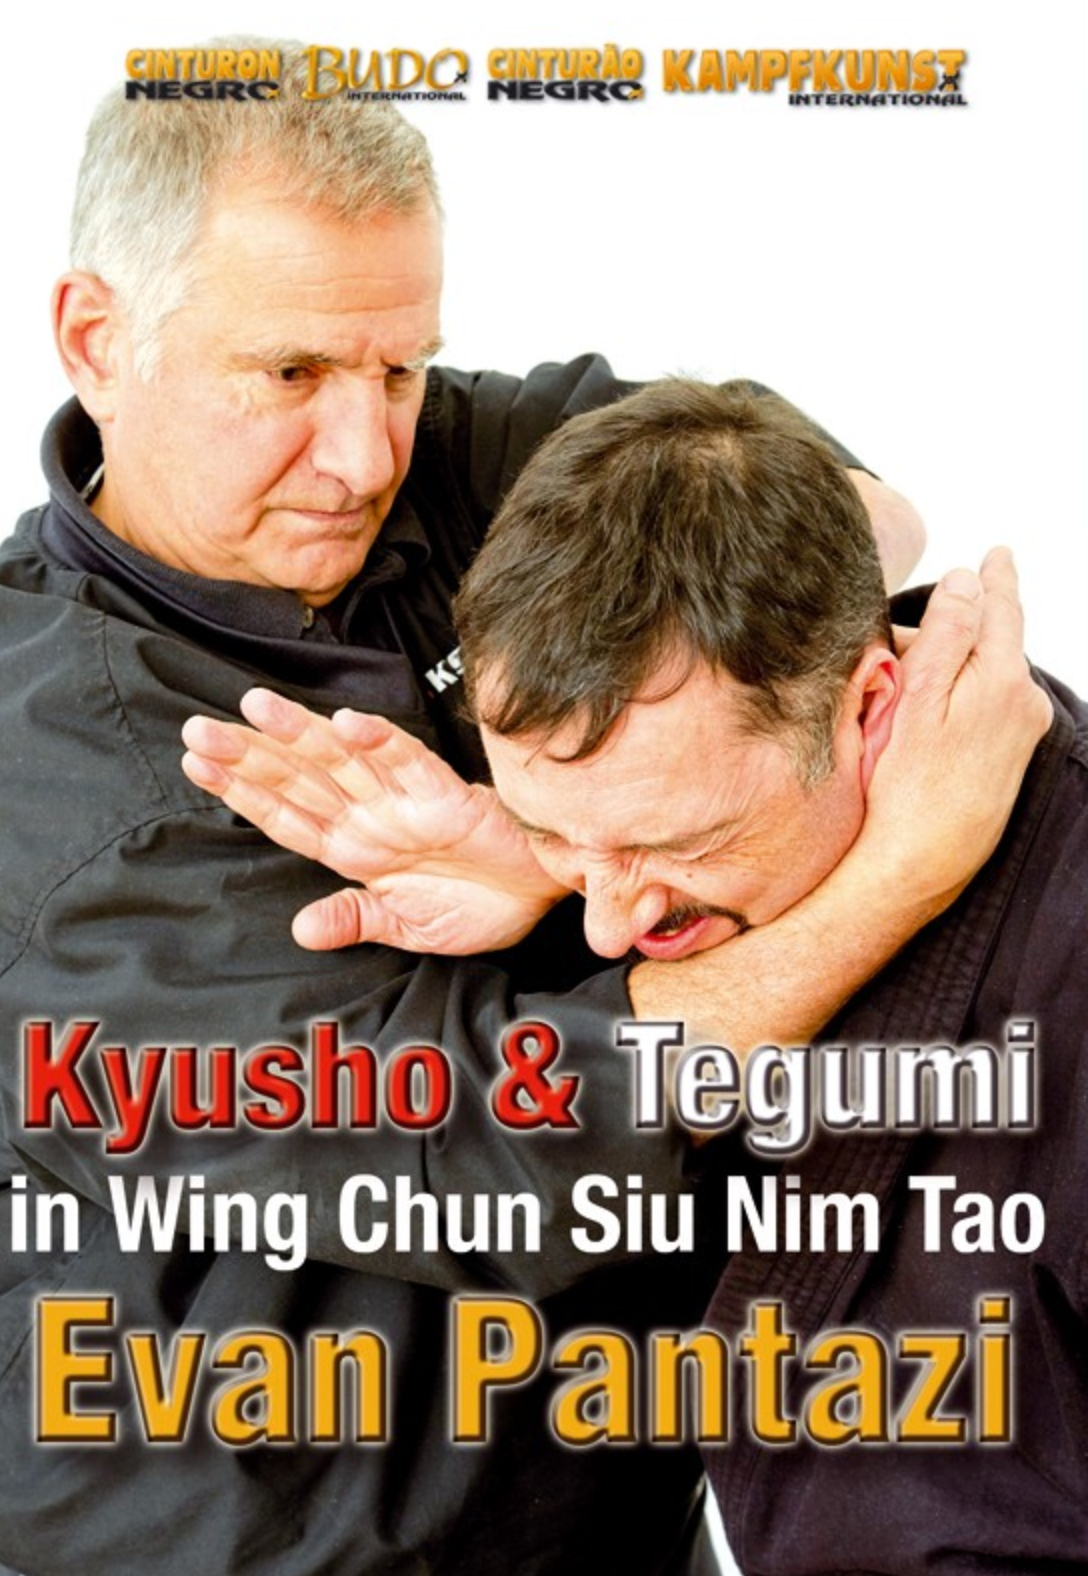 Kyusho & Tegumi in Wing Chun Siu Nim Tao DVD by Evan Pantazi - Budovideos Inc